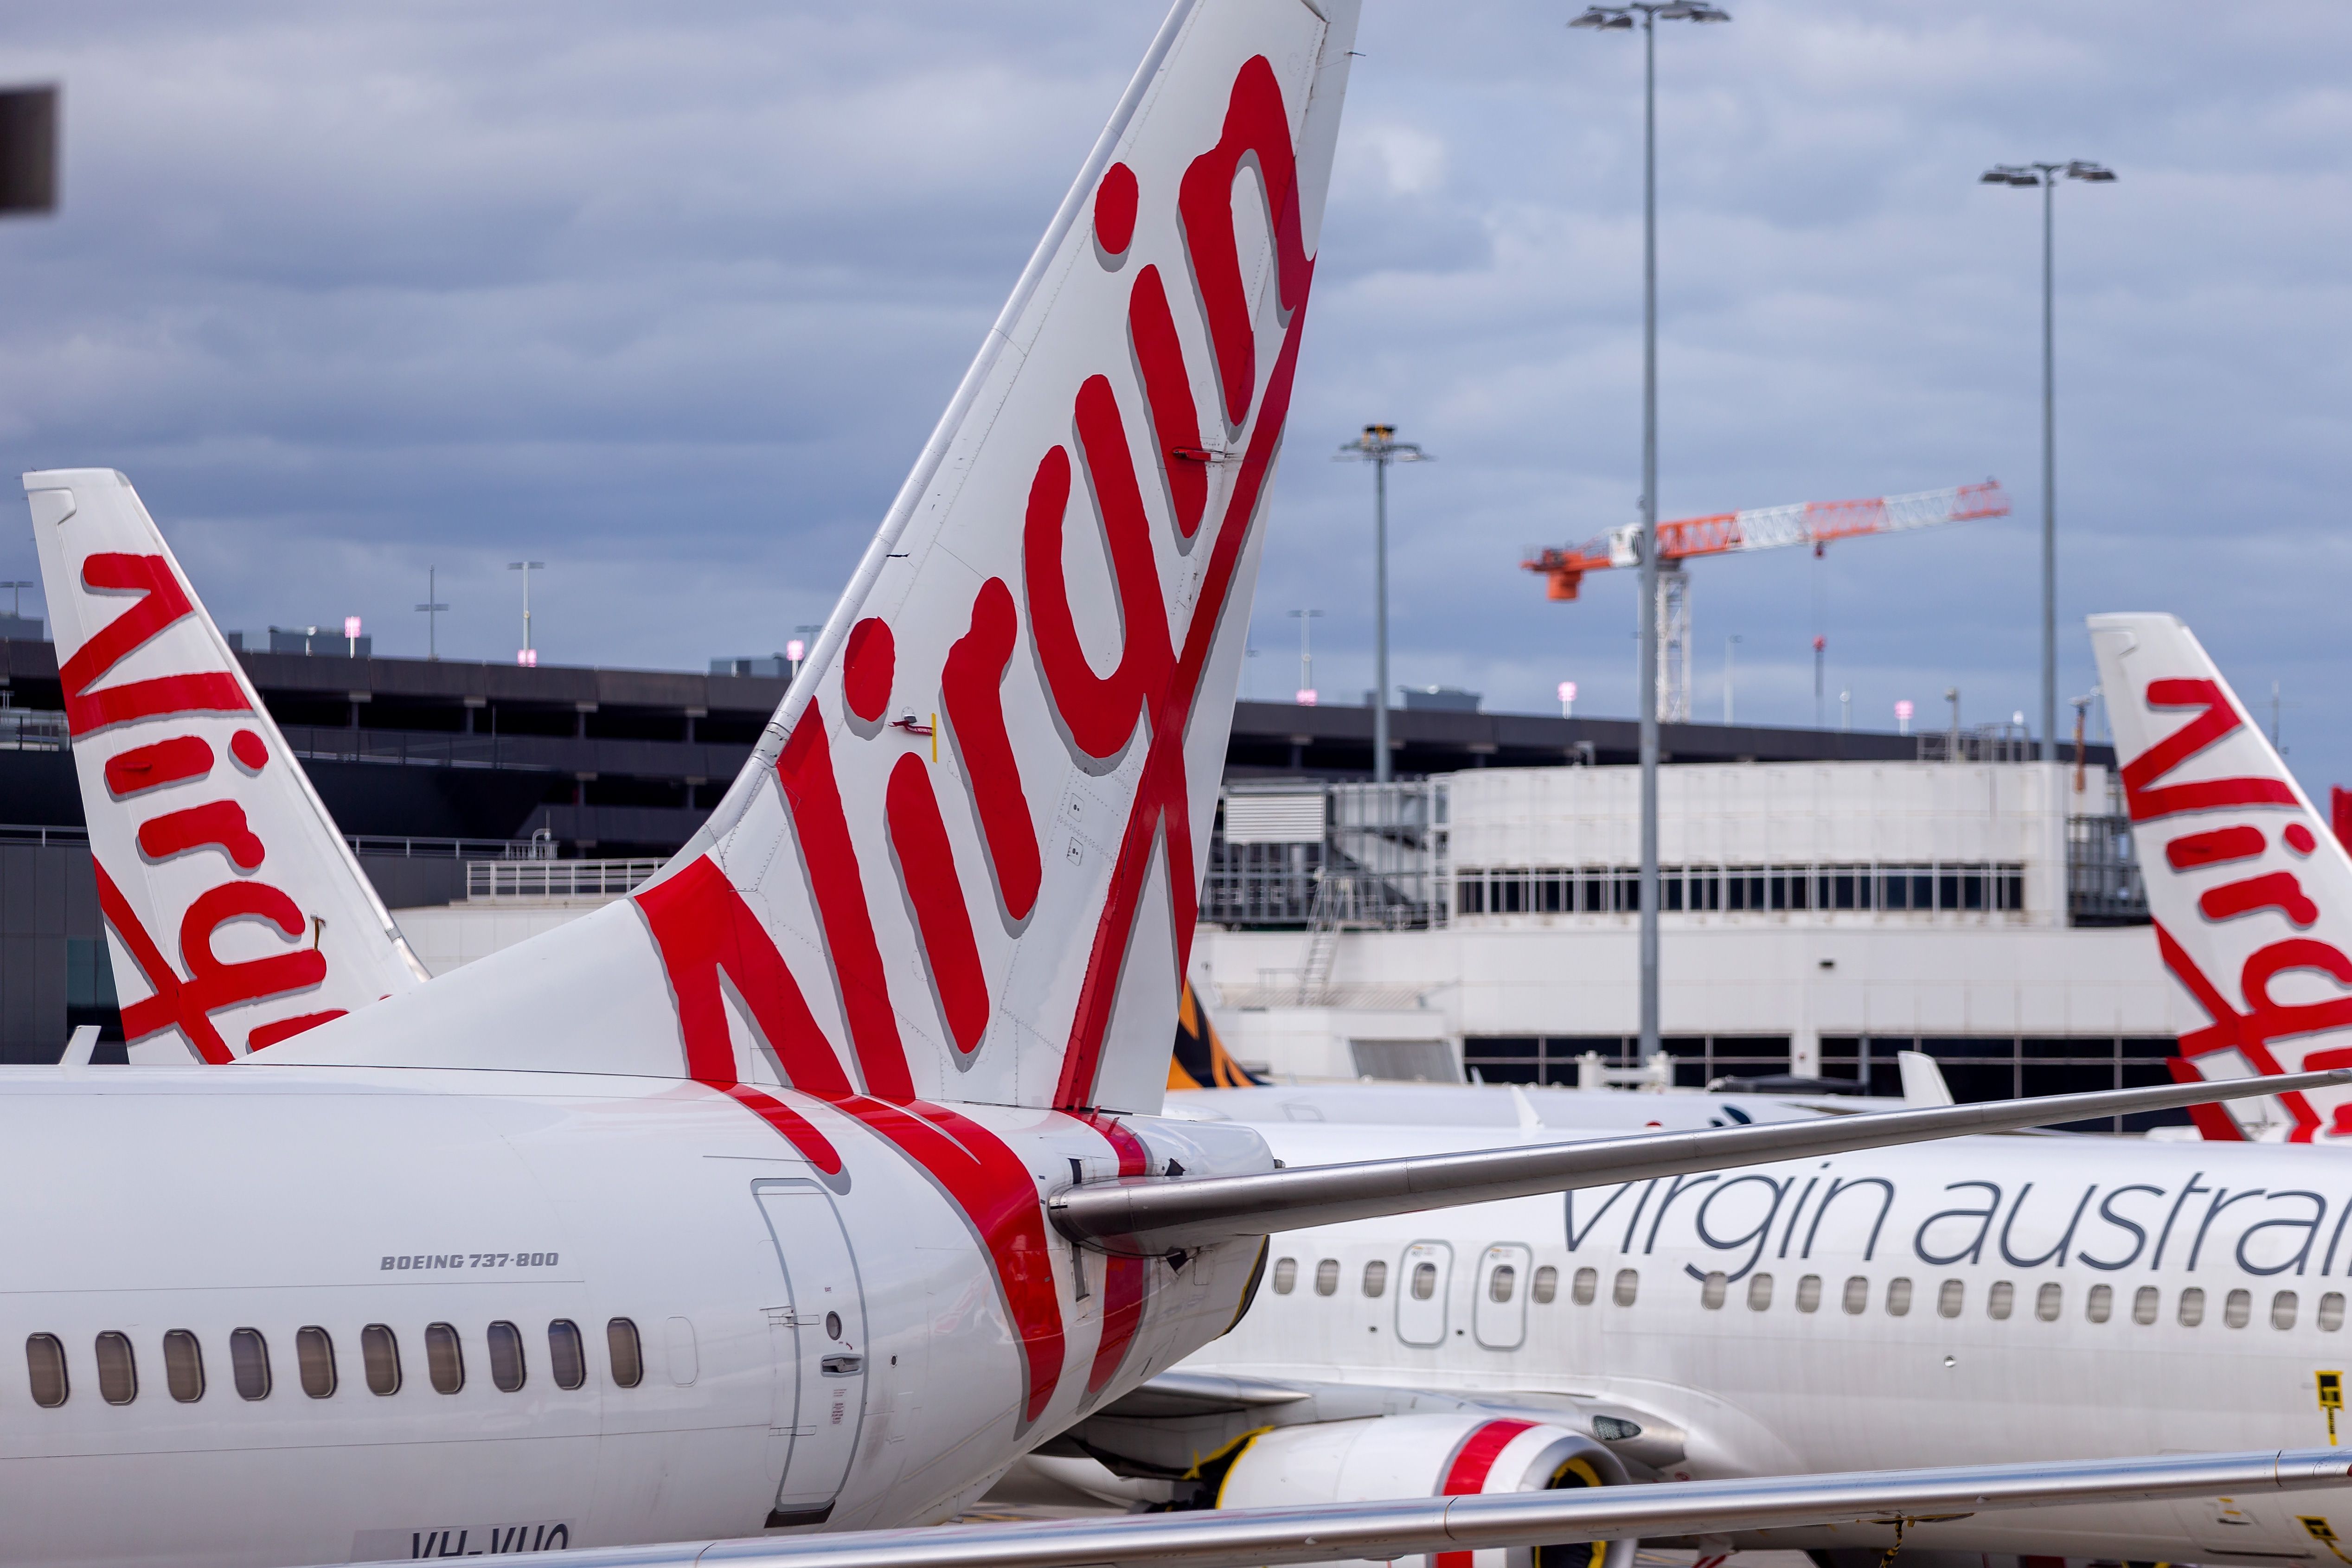 Virgin Australia Boeing 737-800s at Sydney Airport